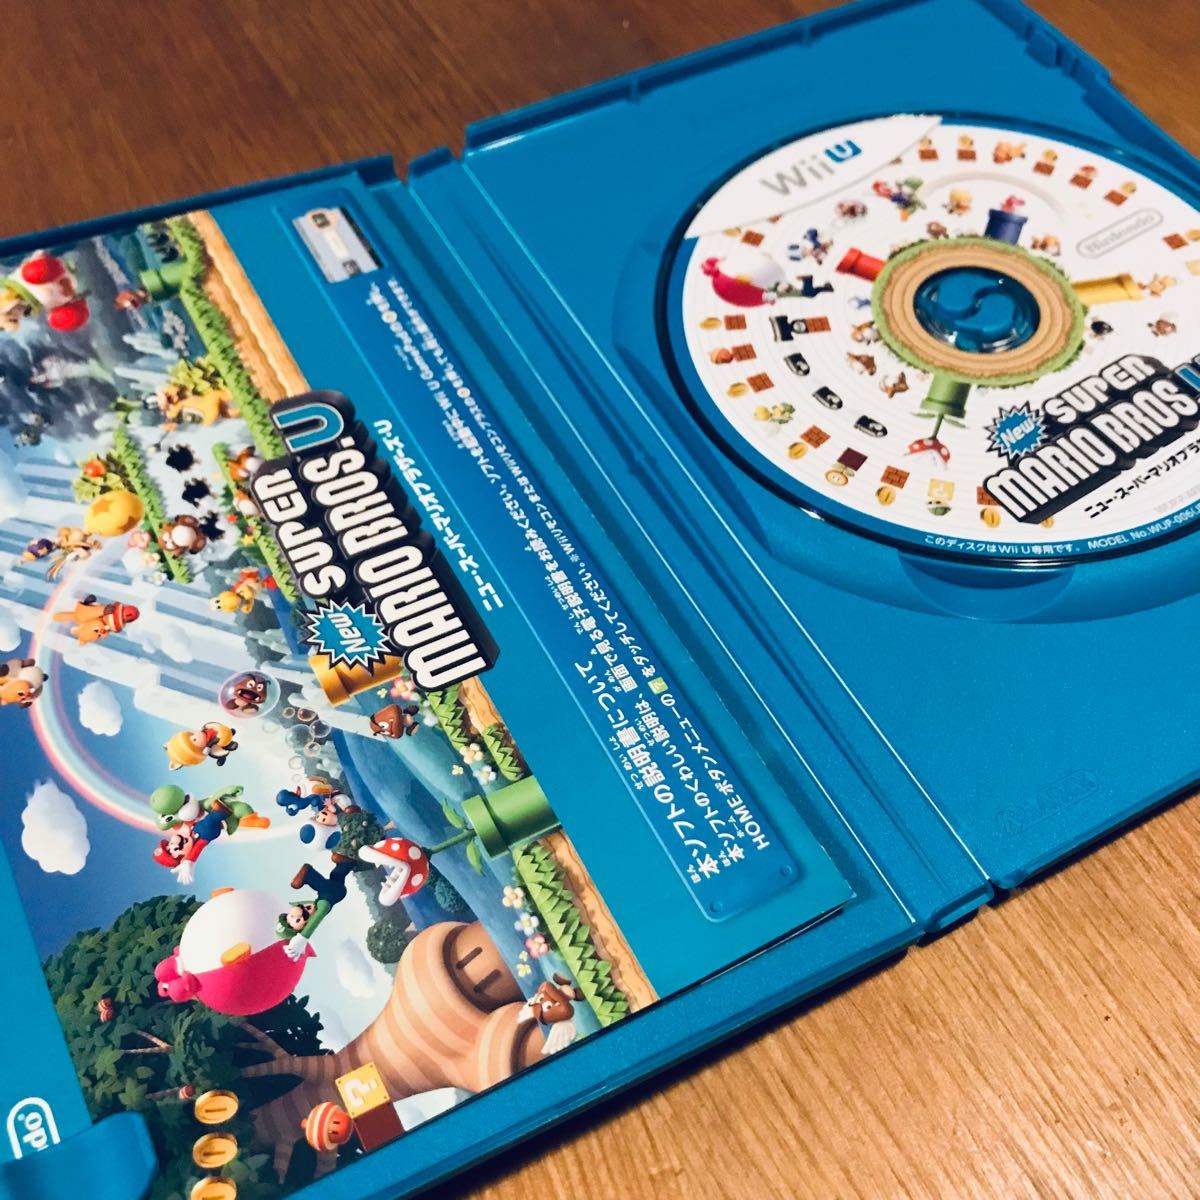 NewスーパーマリオブラザーズU ニンテンドーランド　セット WiiU